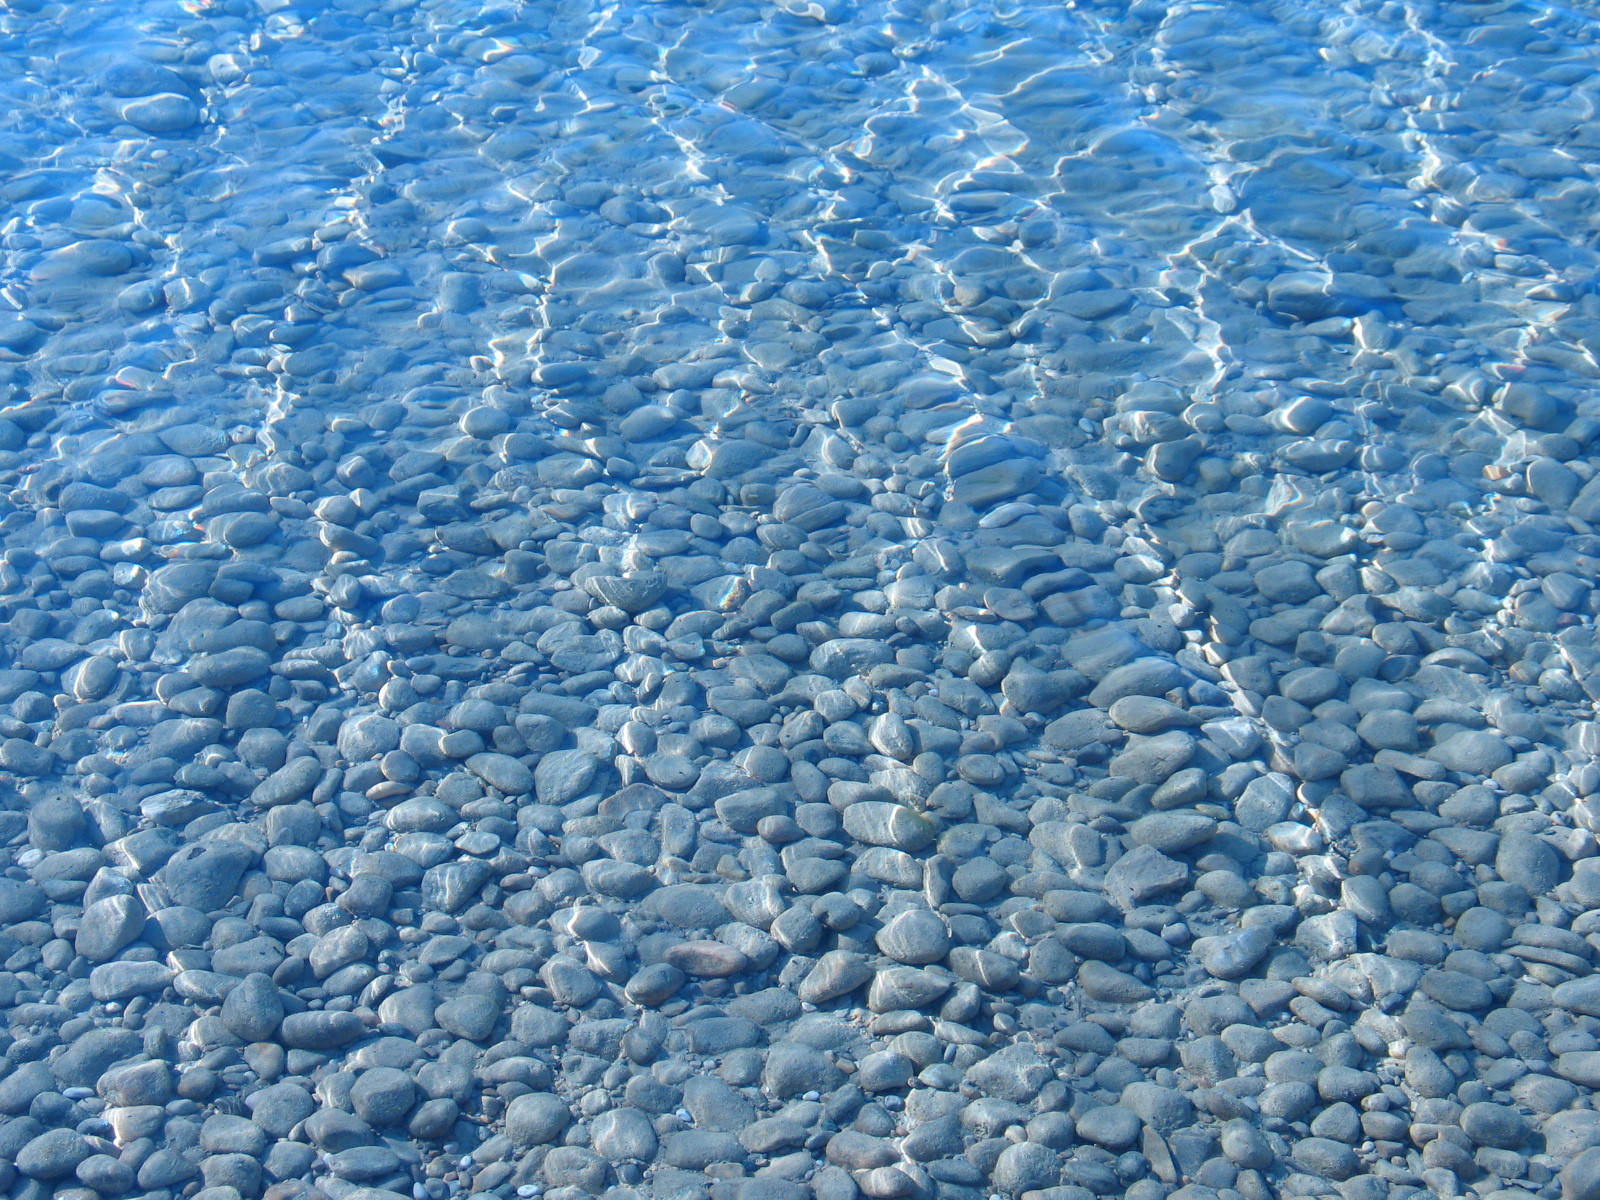 File:Stones-in-water.jpg - Wikimedia Commons